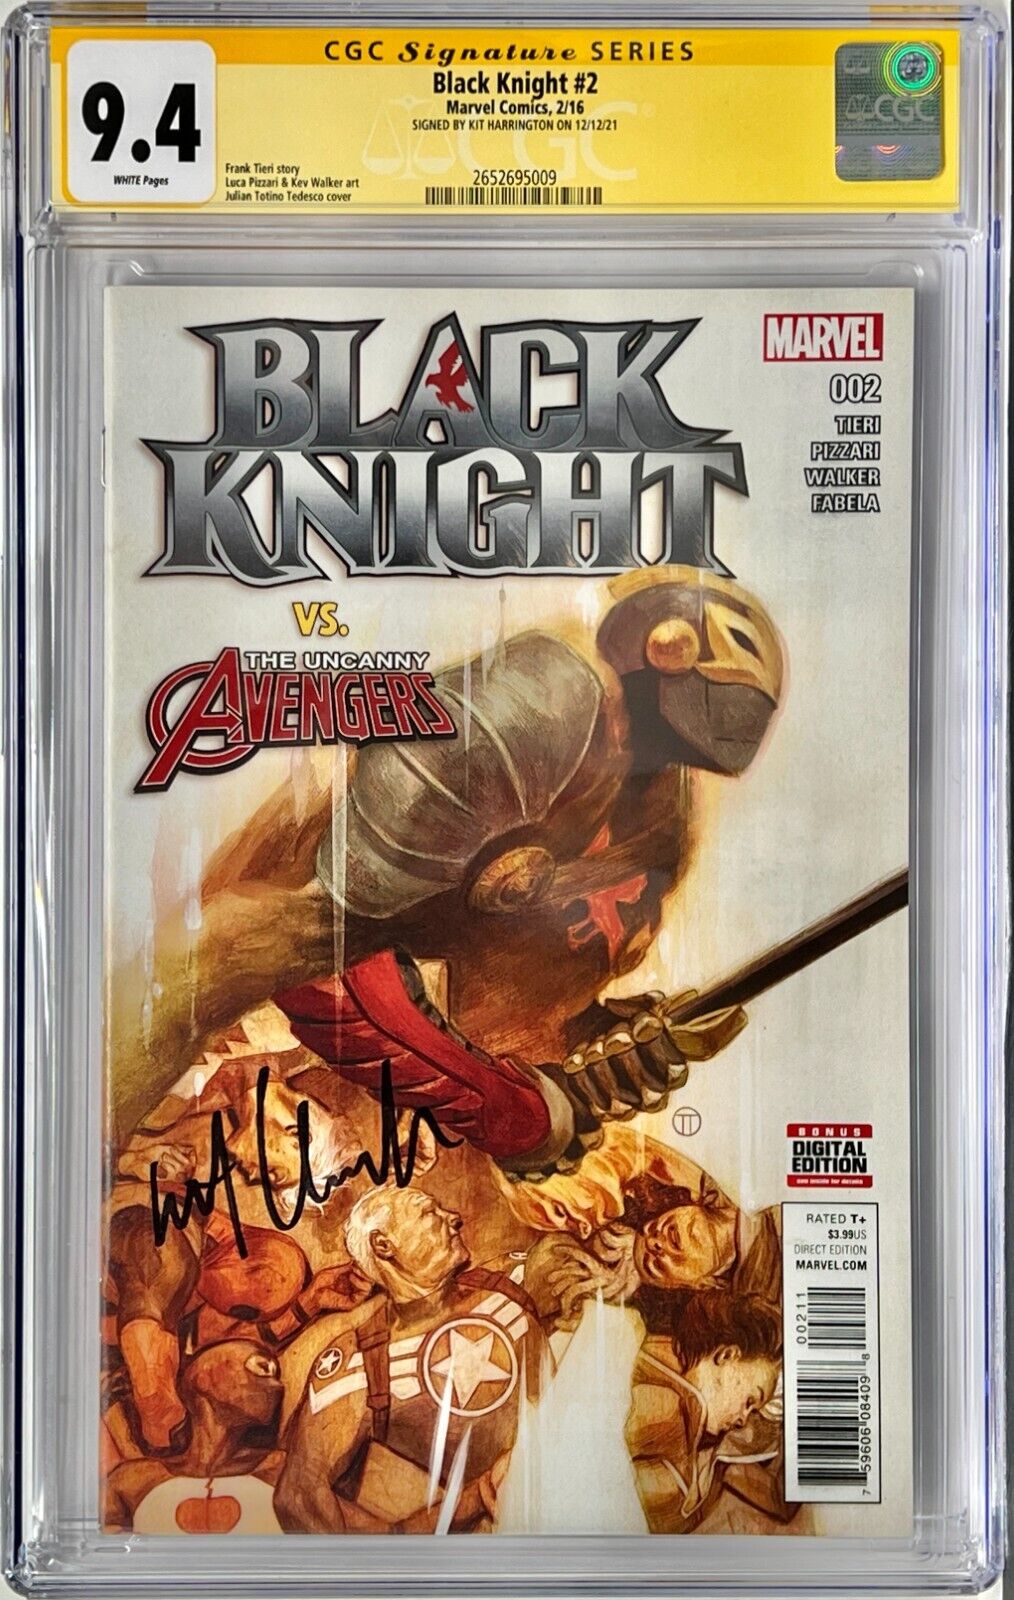 CGC Signature Series Graded 9.4 Marvel Black Knight #2 Signed by Kit Harington